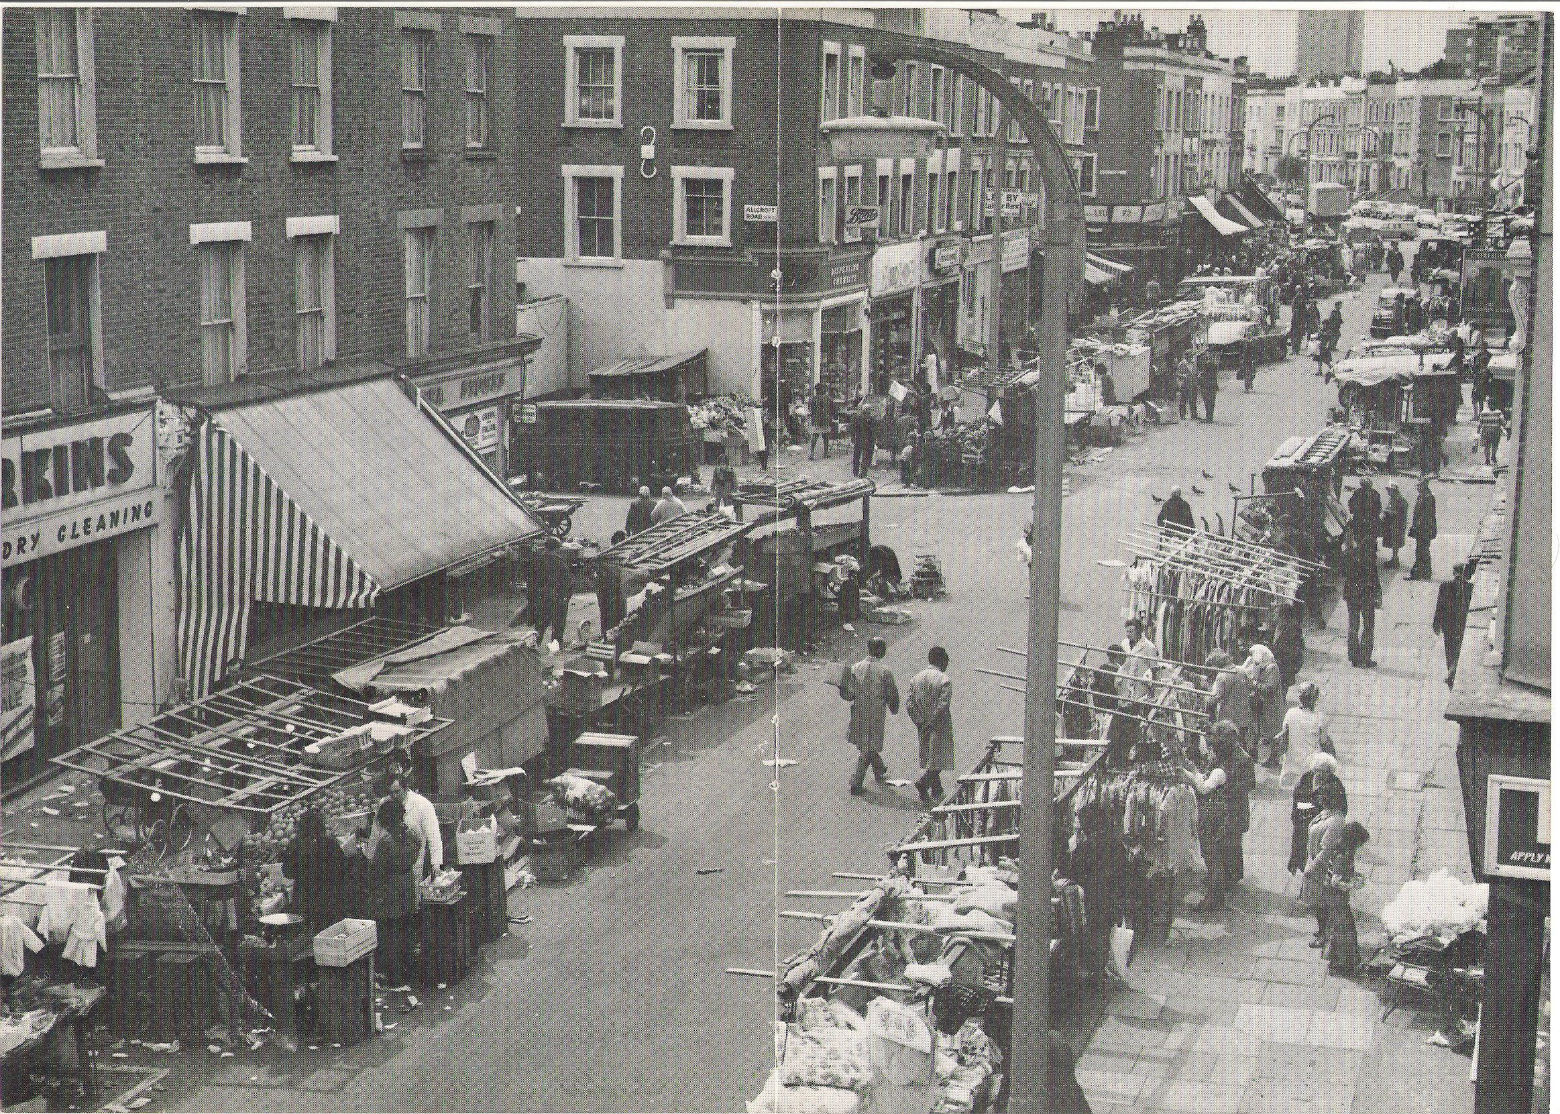 Queen's Crescent Market in 19750. Photo courtesy of Des Whynam